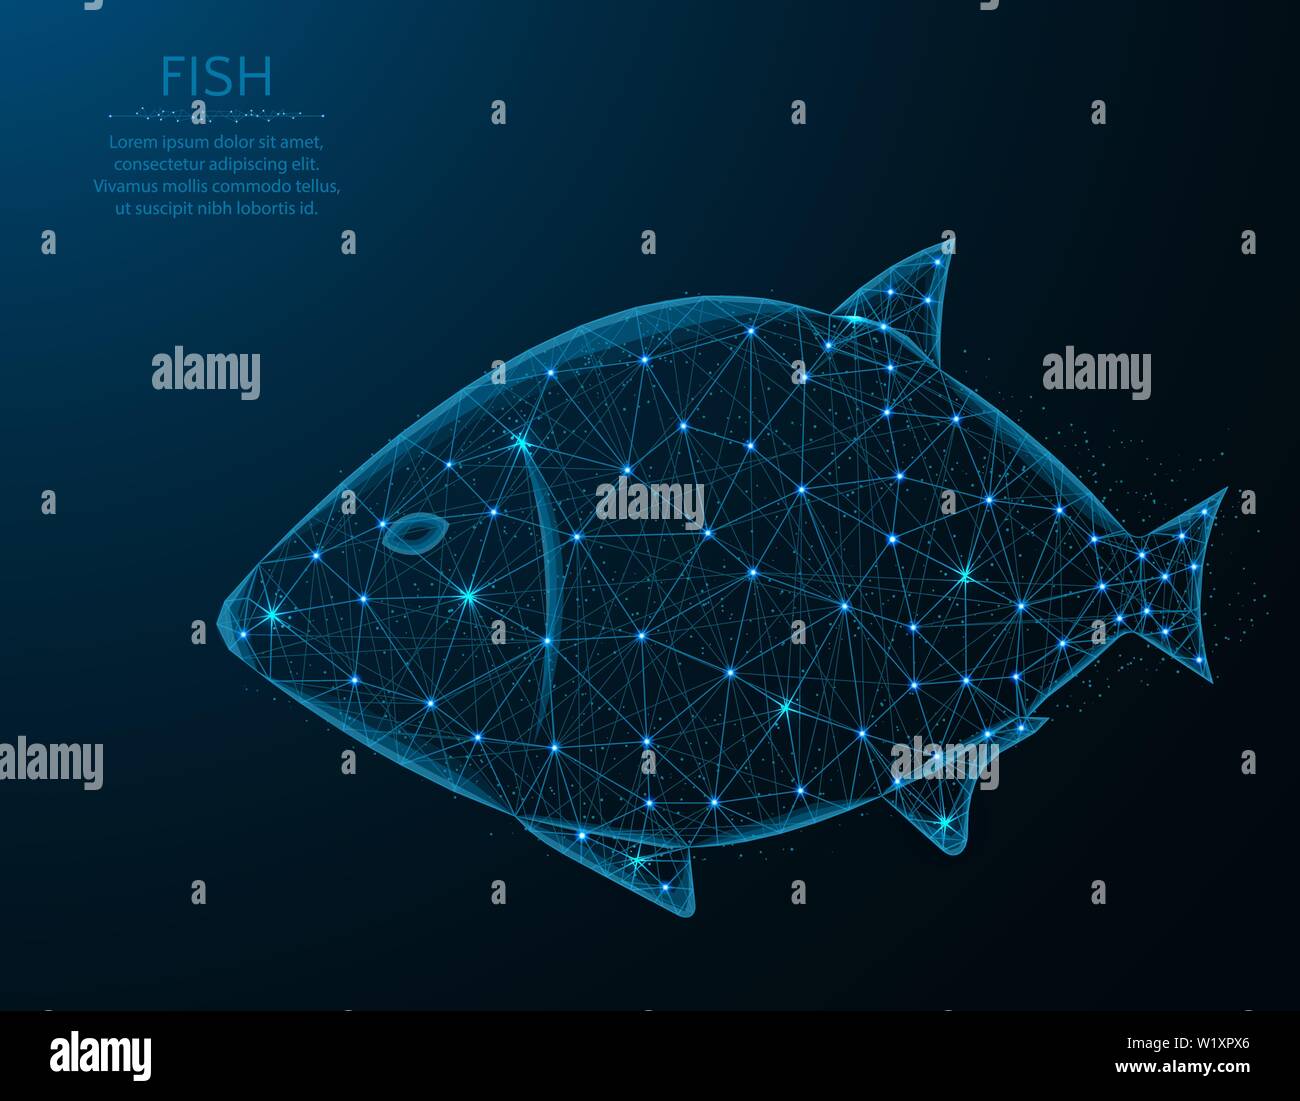 Fish net underwater Stock Vector Images - Alamy